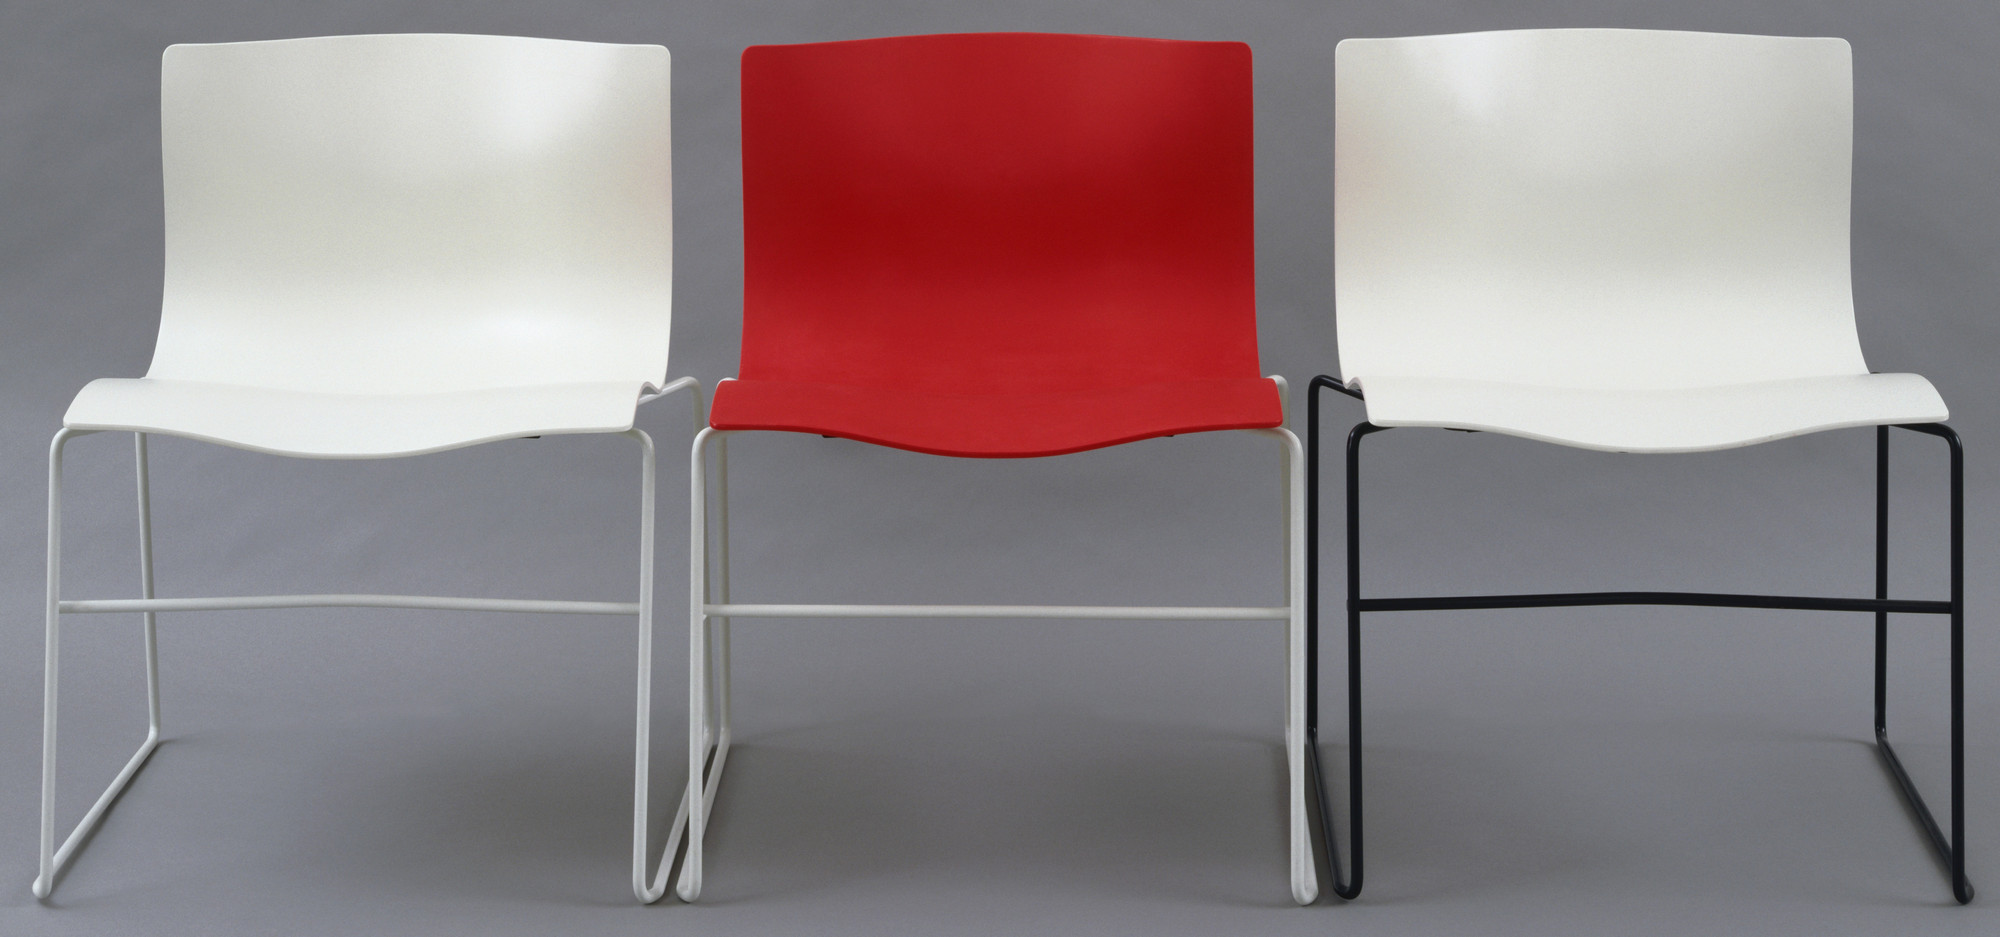 Handkerchief Chair. Designed by Massimo Vignelli, Lella Vignelli, David Law. 1985. Manufacturer: Knoll International, Inc., New York, NY. Medium: Fiberglass-reinforced polyester and metal